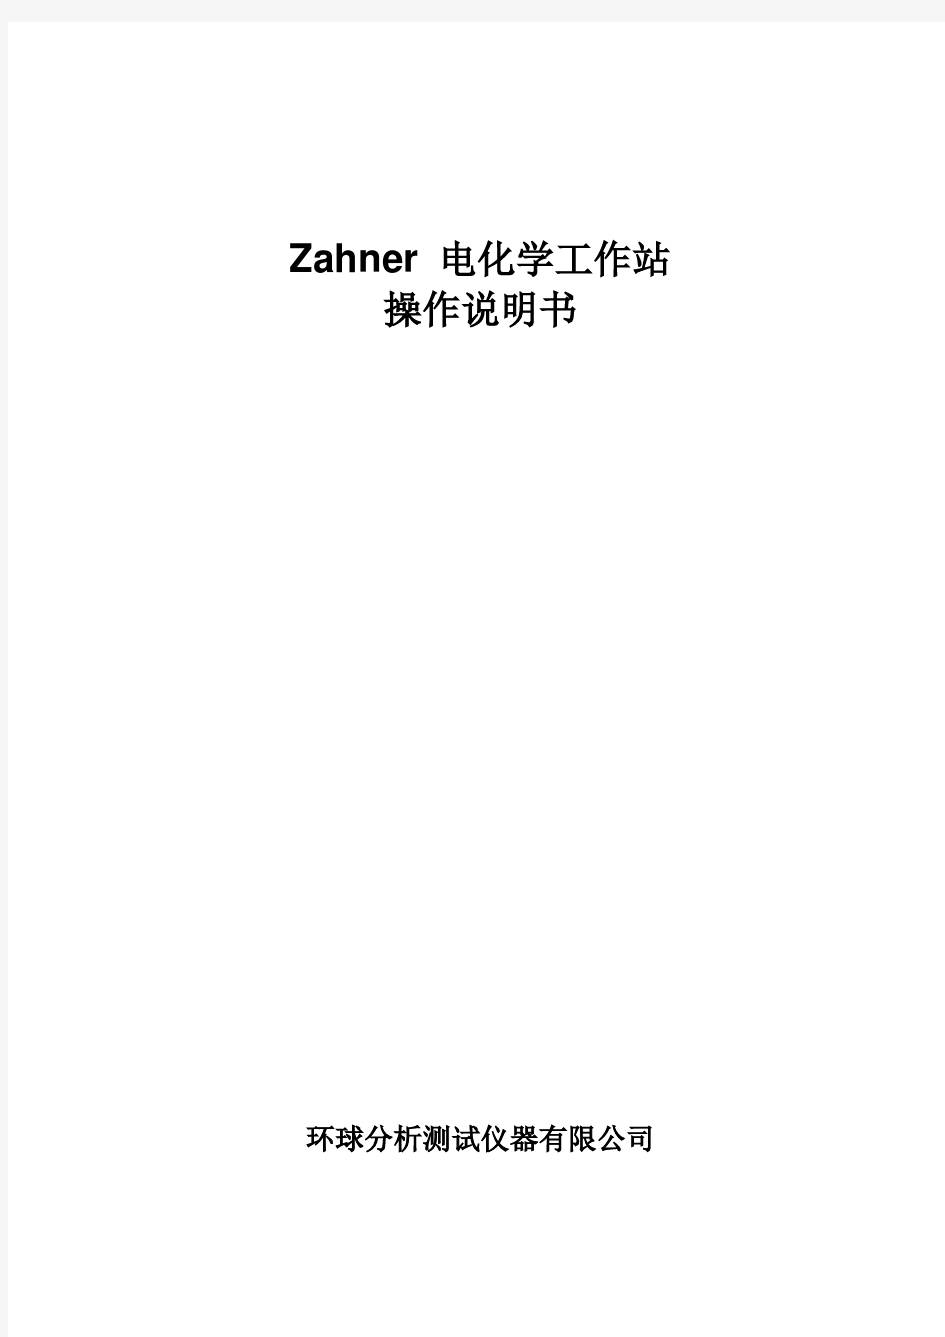 Zahner_IM6 电化学工作站中文说明书